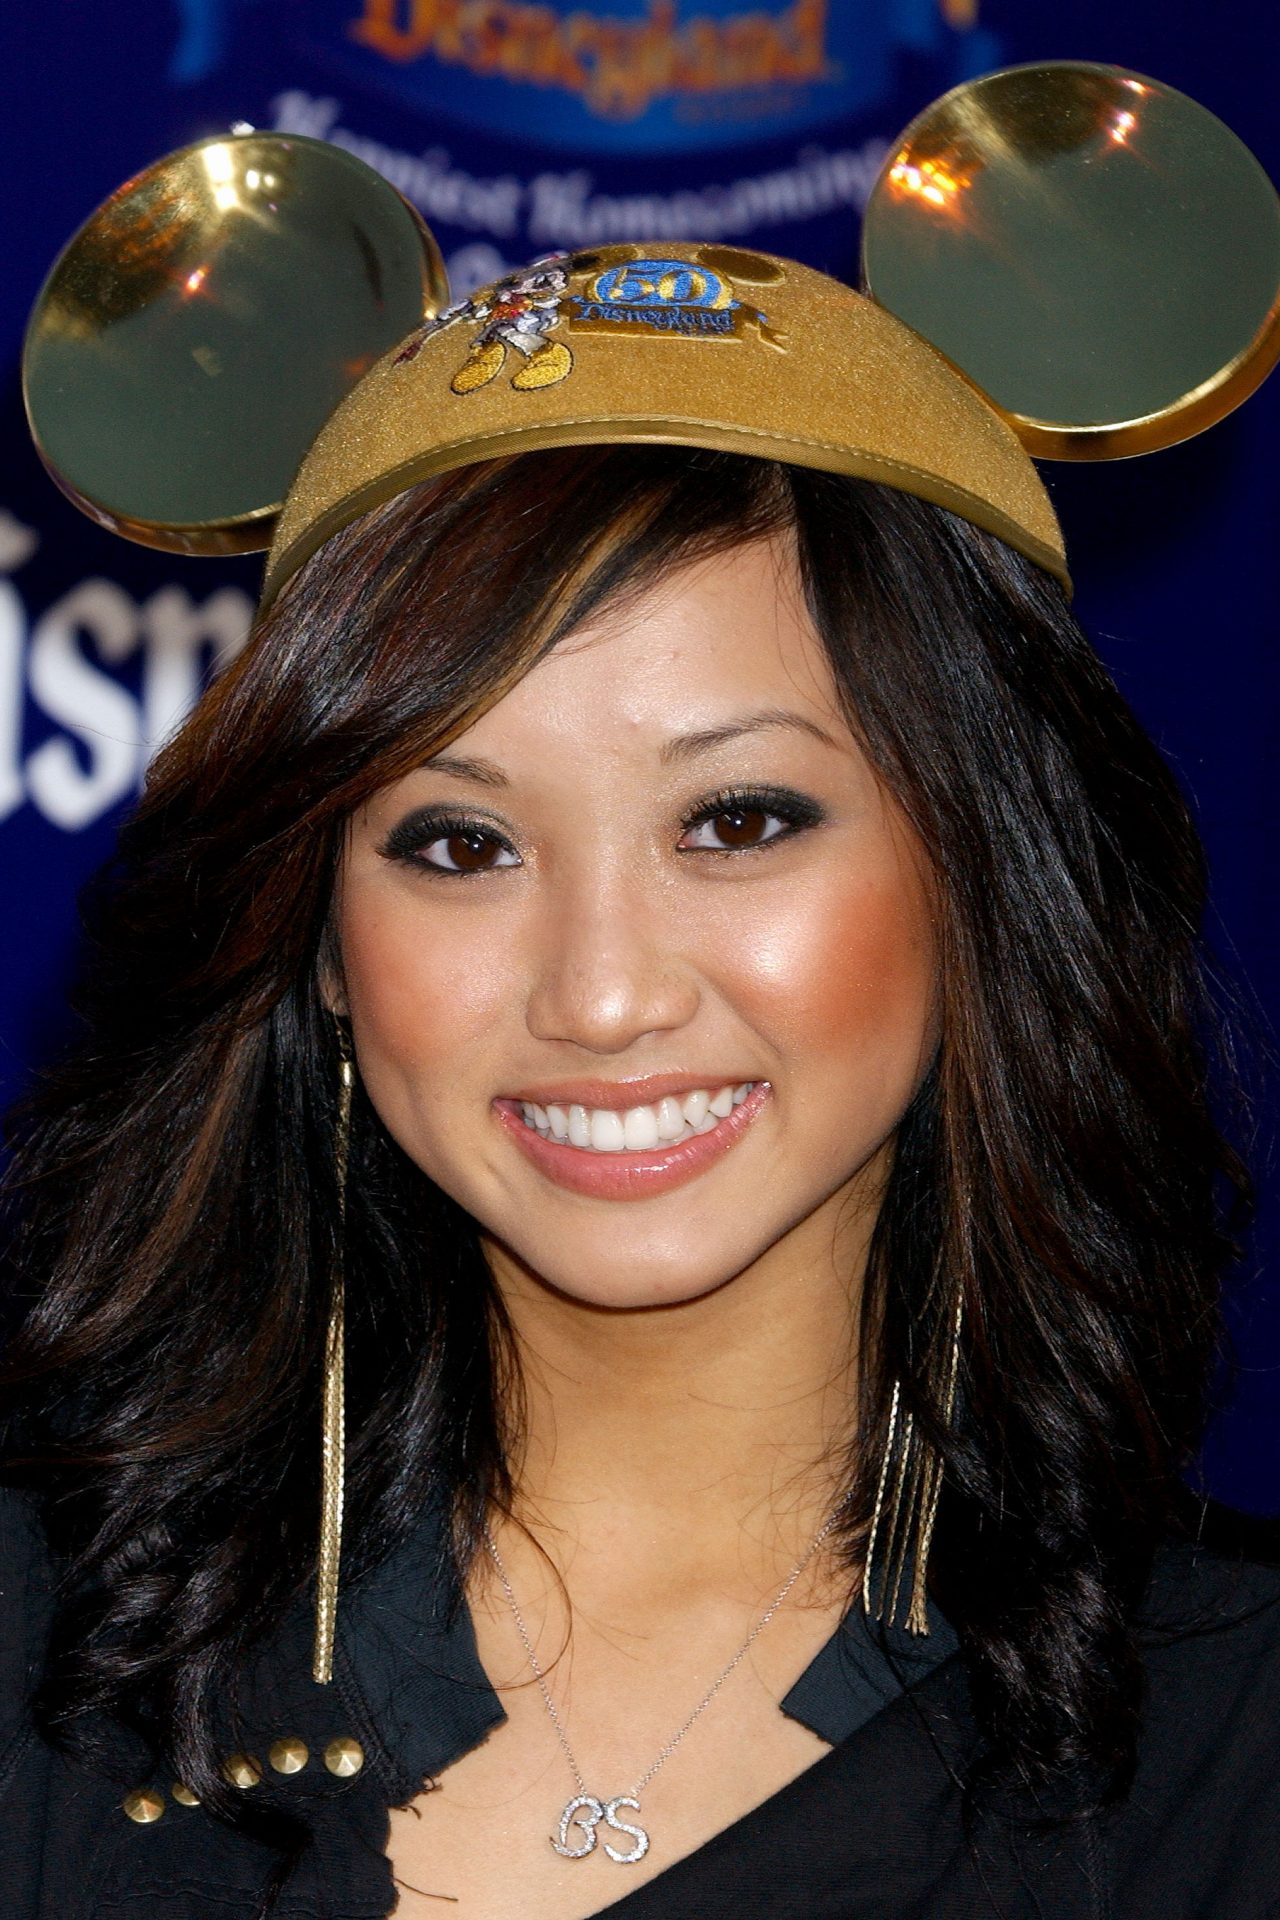 Brenda Song in the Disney universe